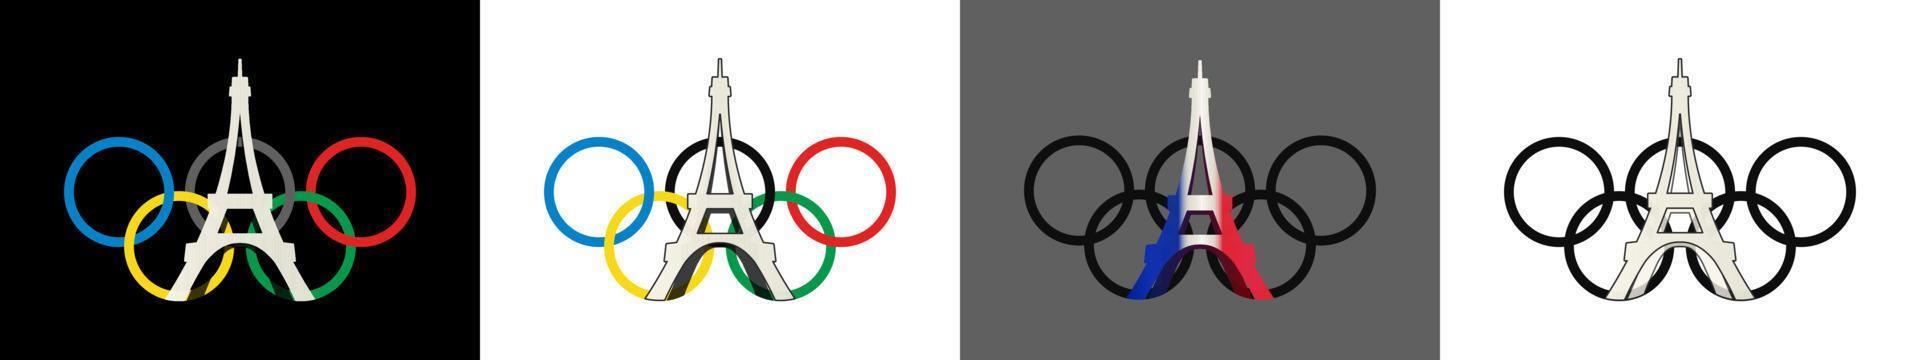 Olympic logo Paris 2024 colorful vector illustration